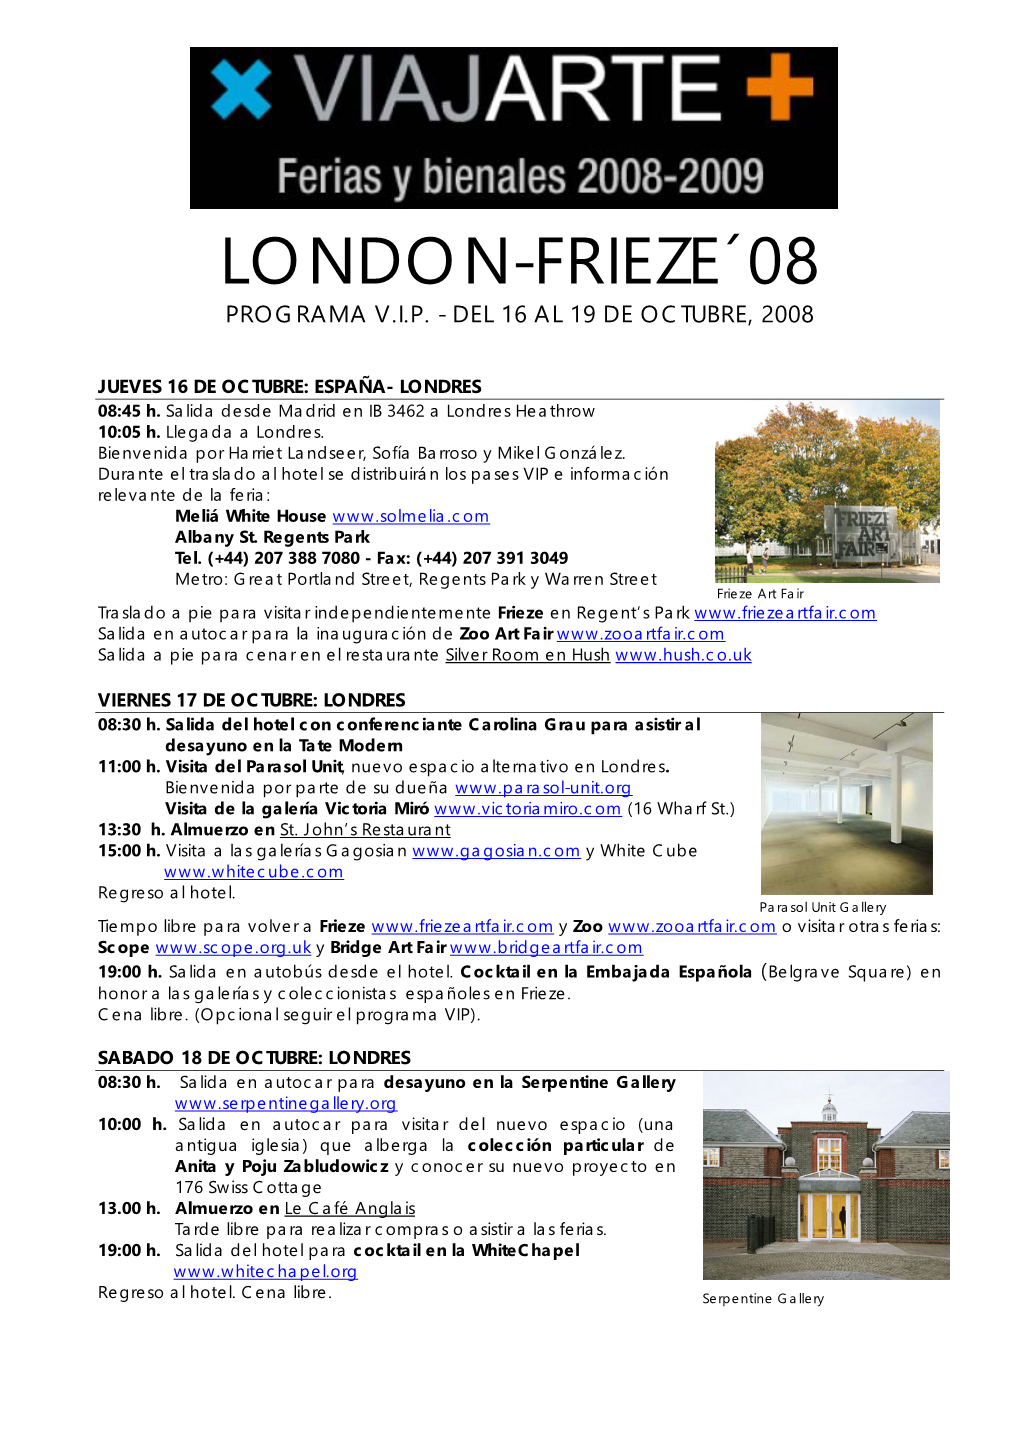 London-Frieze´08 Programa V.I.P